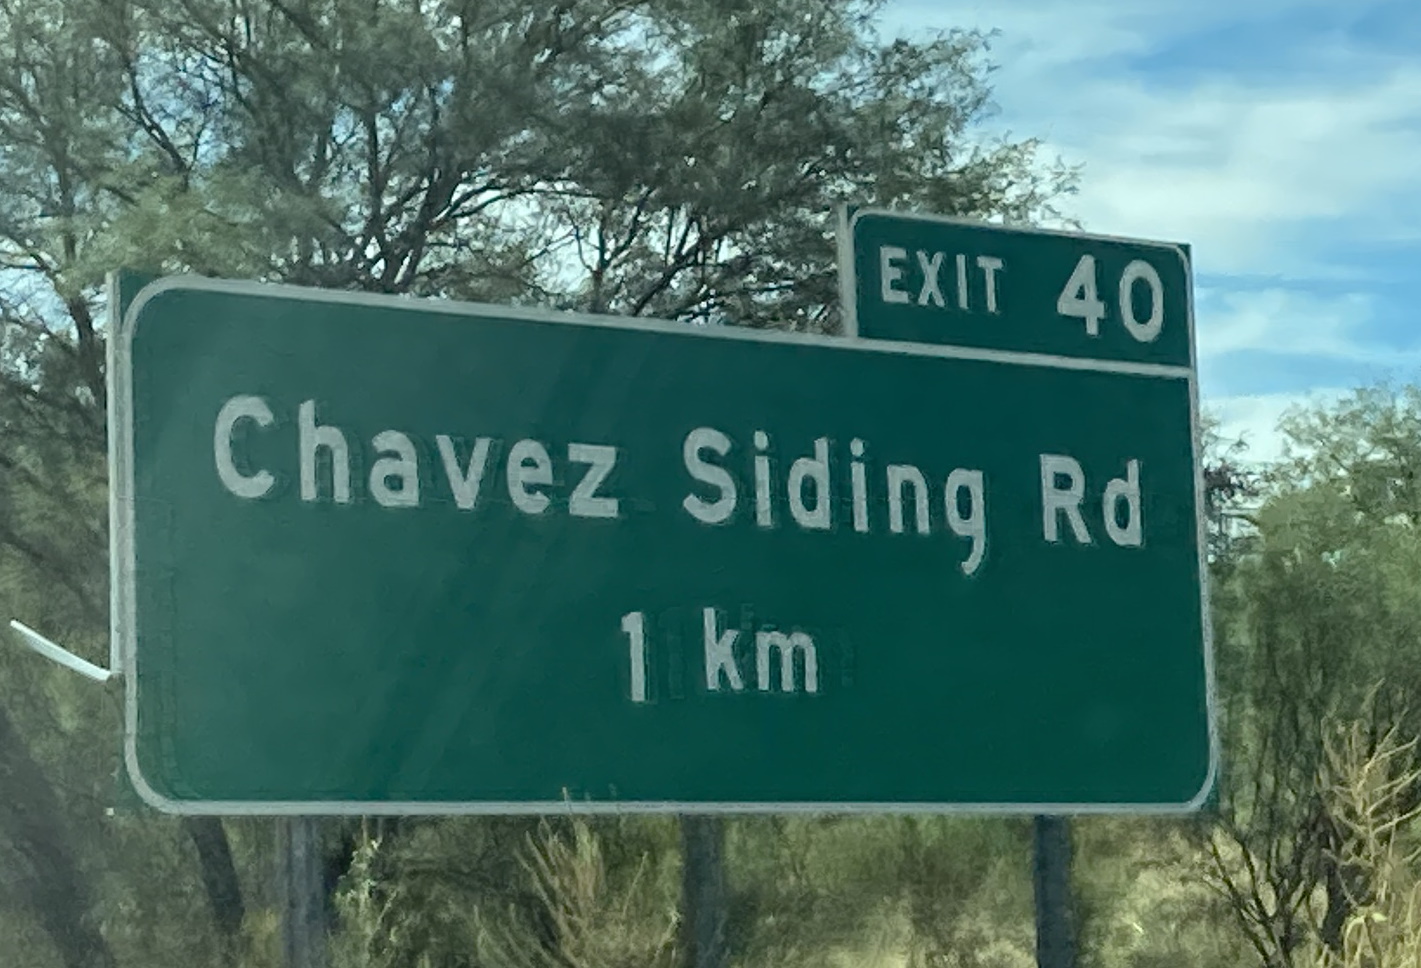 I19S/Chavez Siding